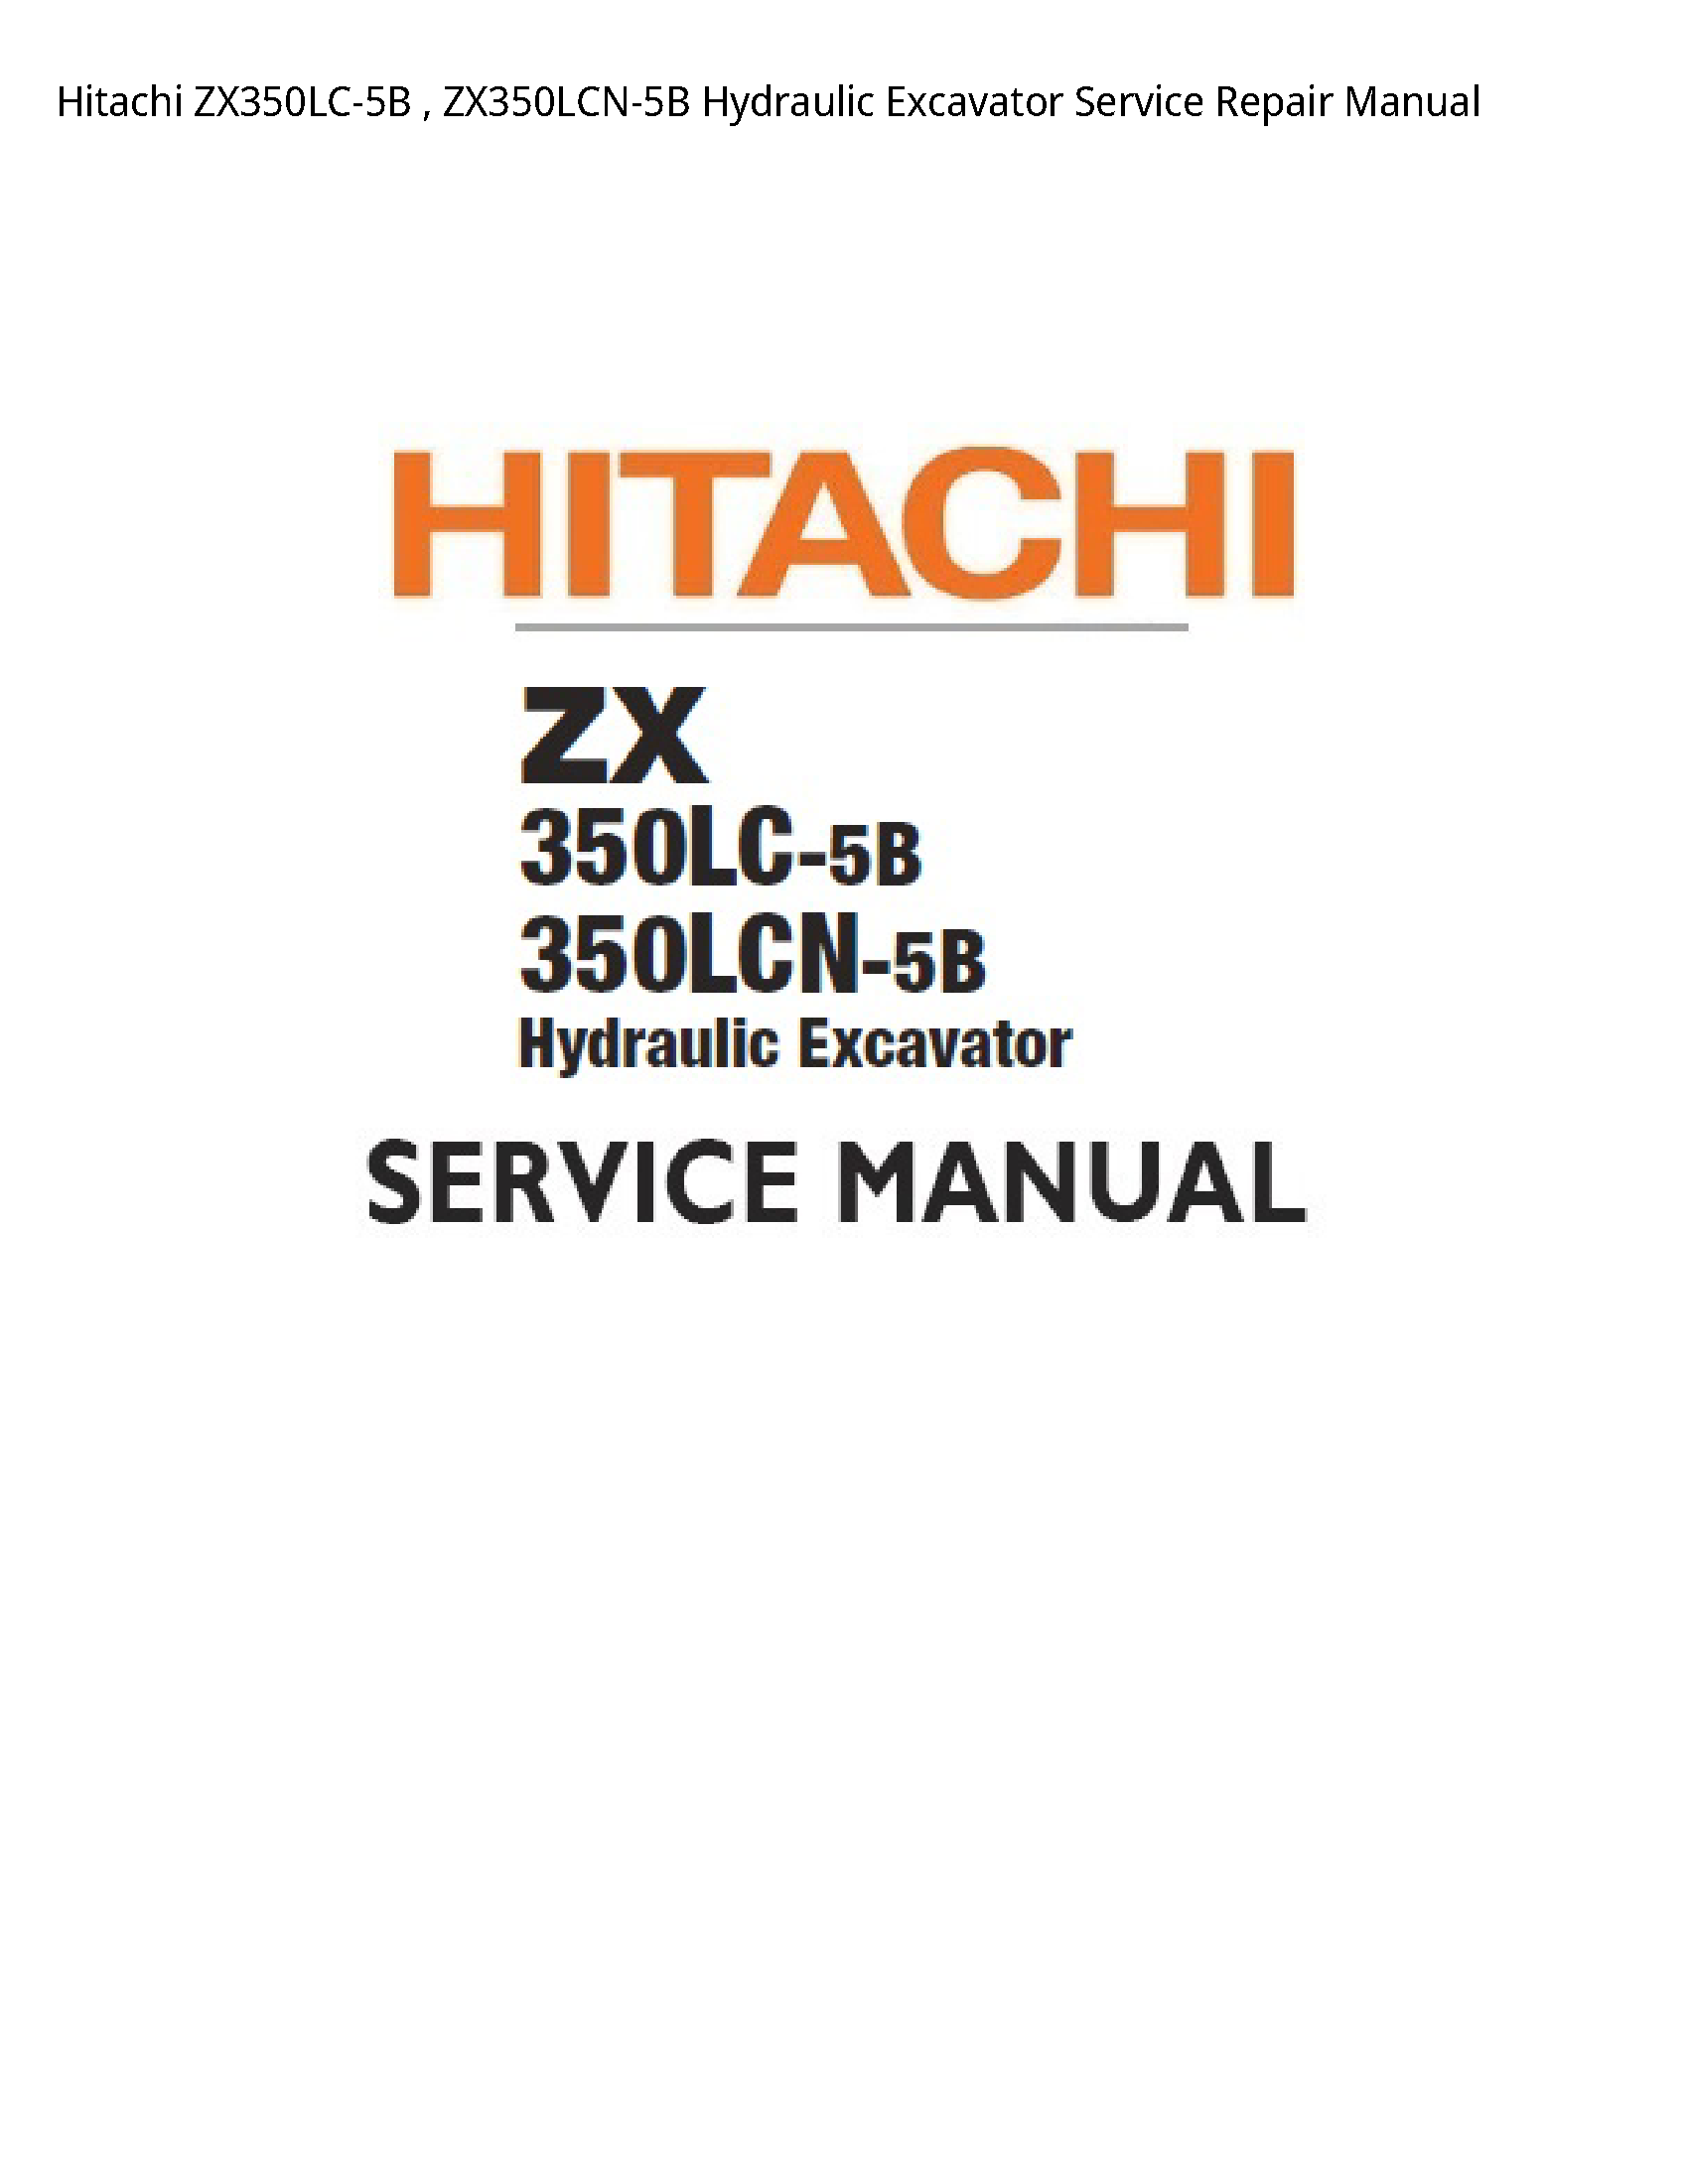 Hitachi ZX350LC-5B Hydraulic Excavator manual